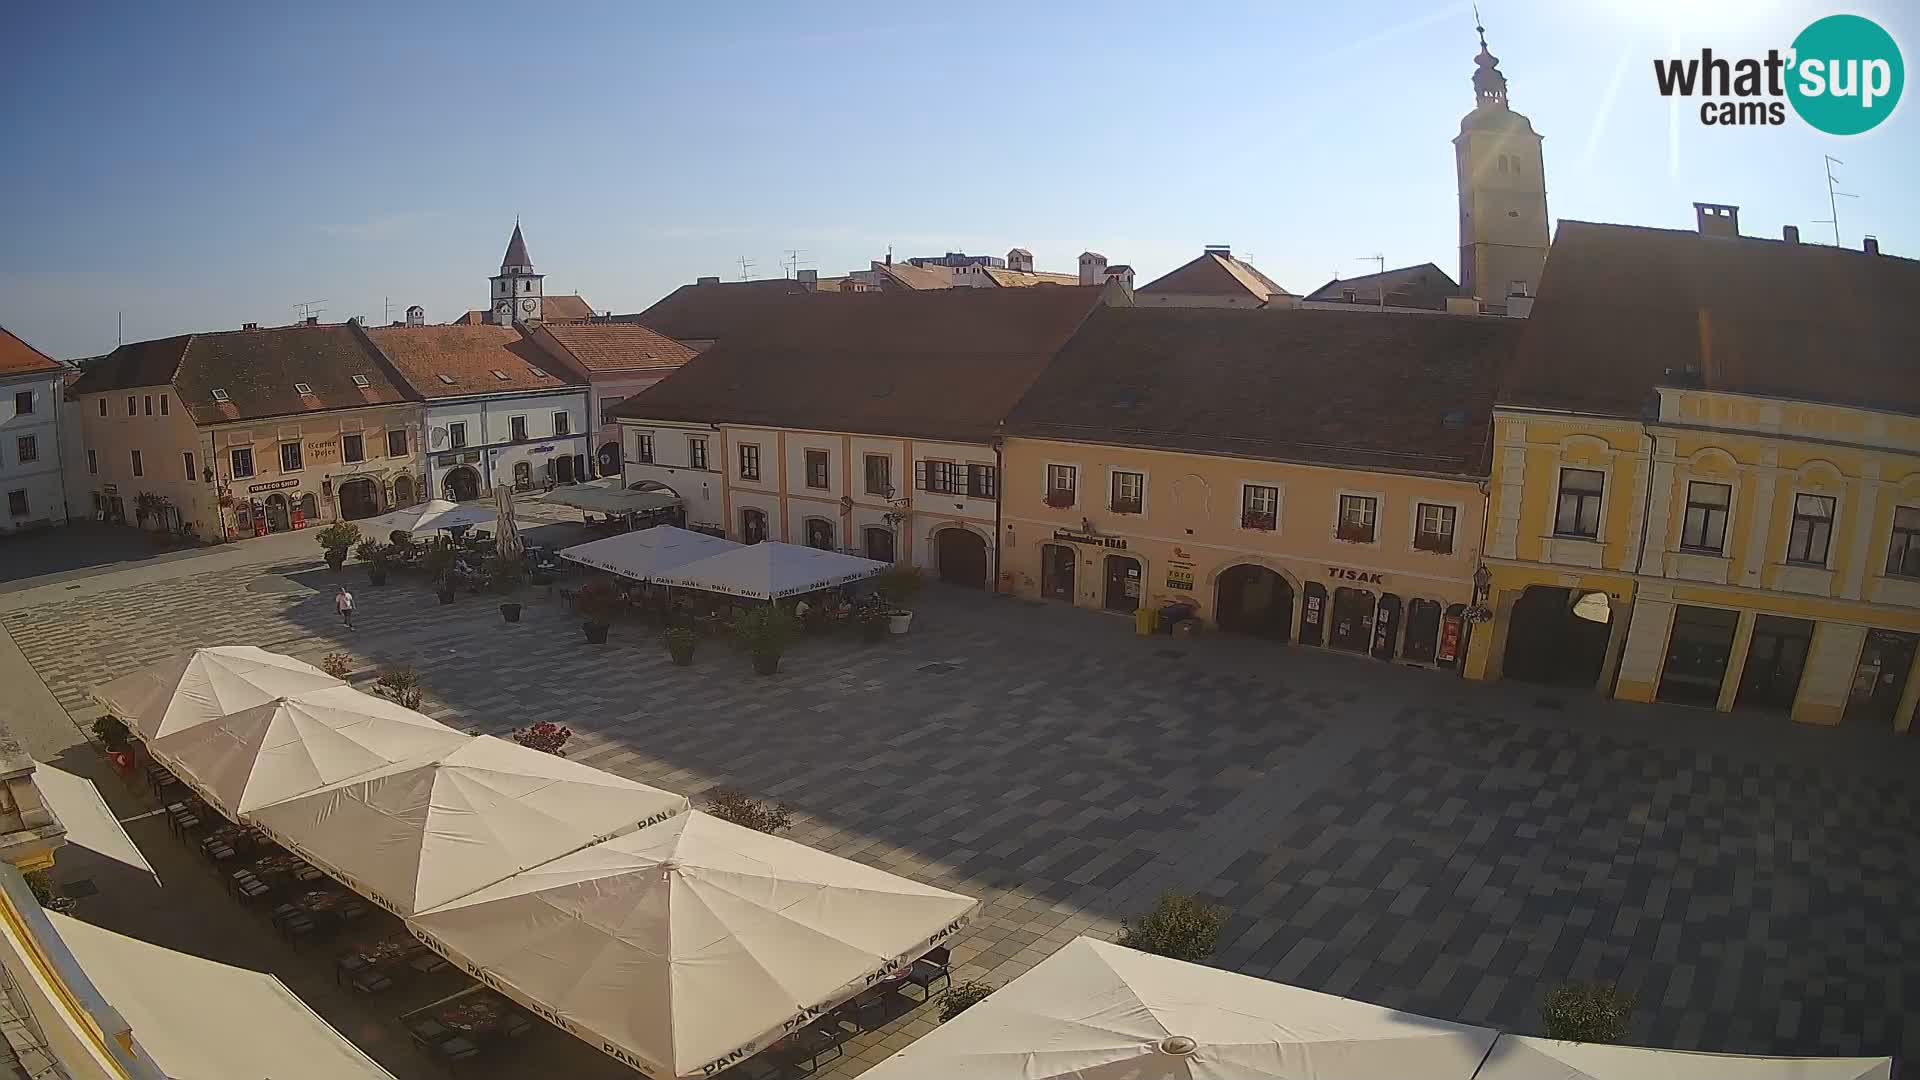 The King Tomislav square